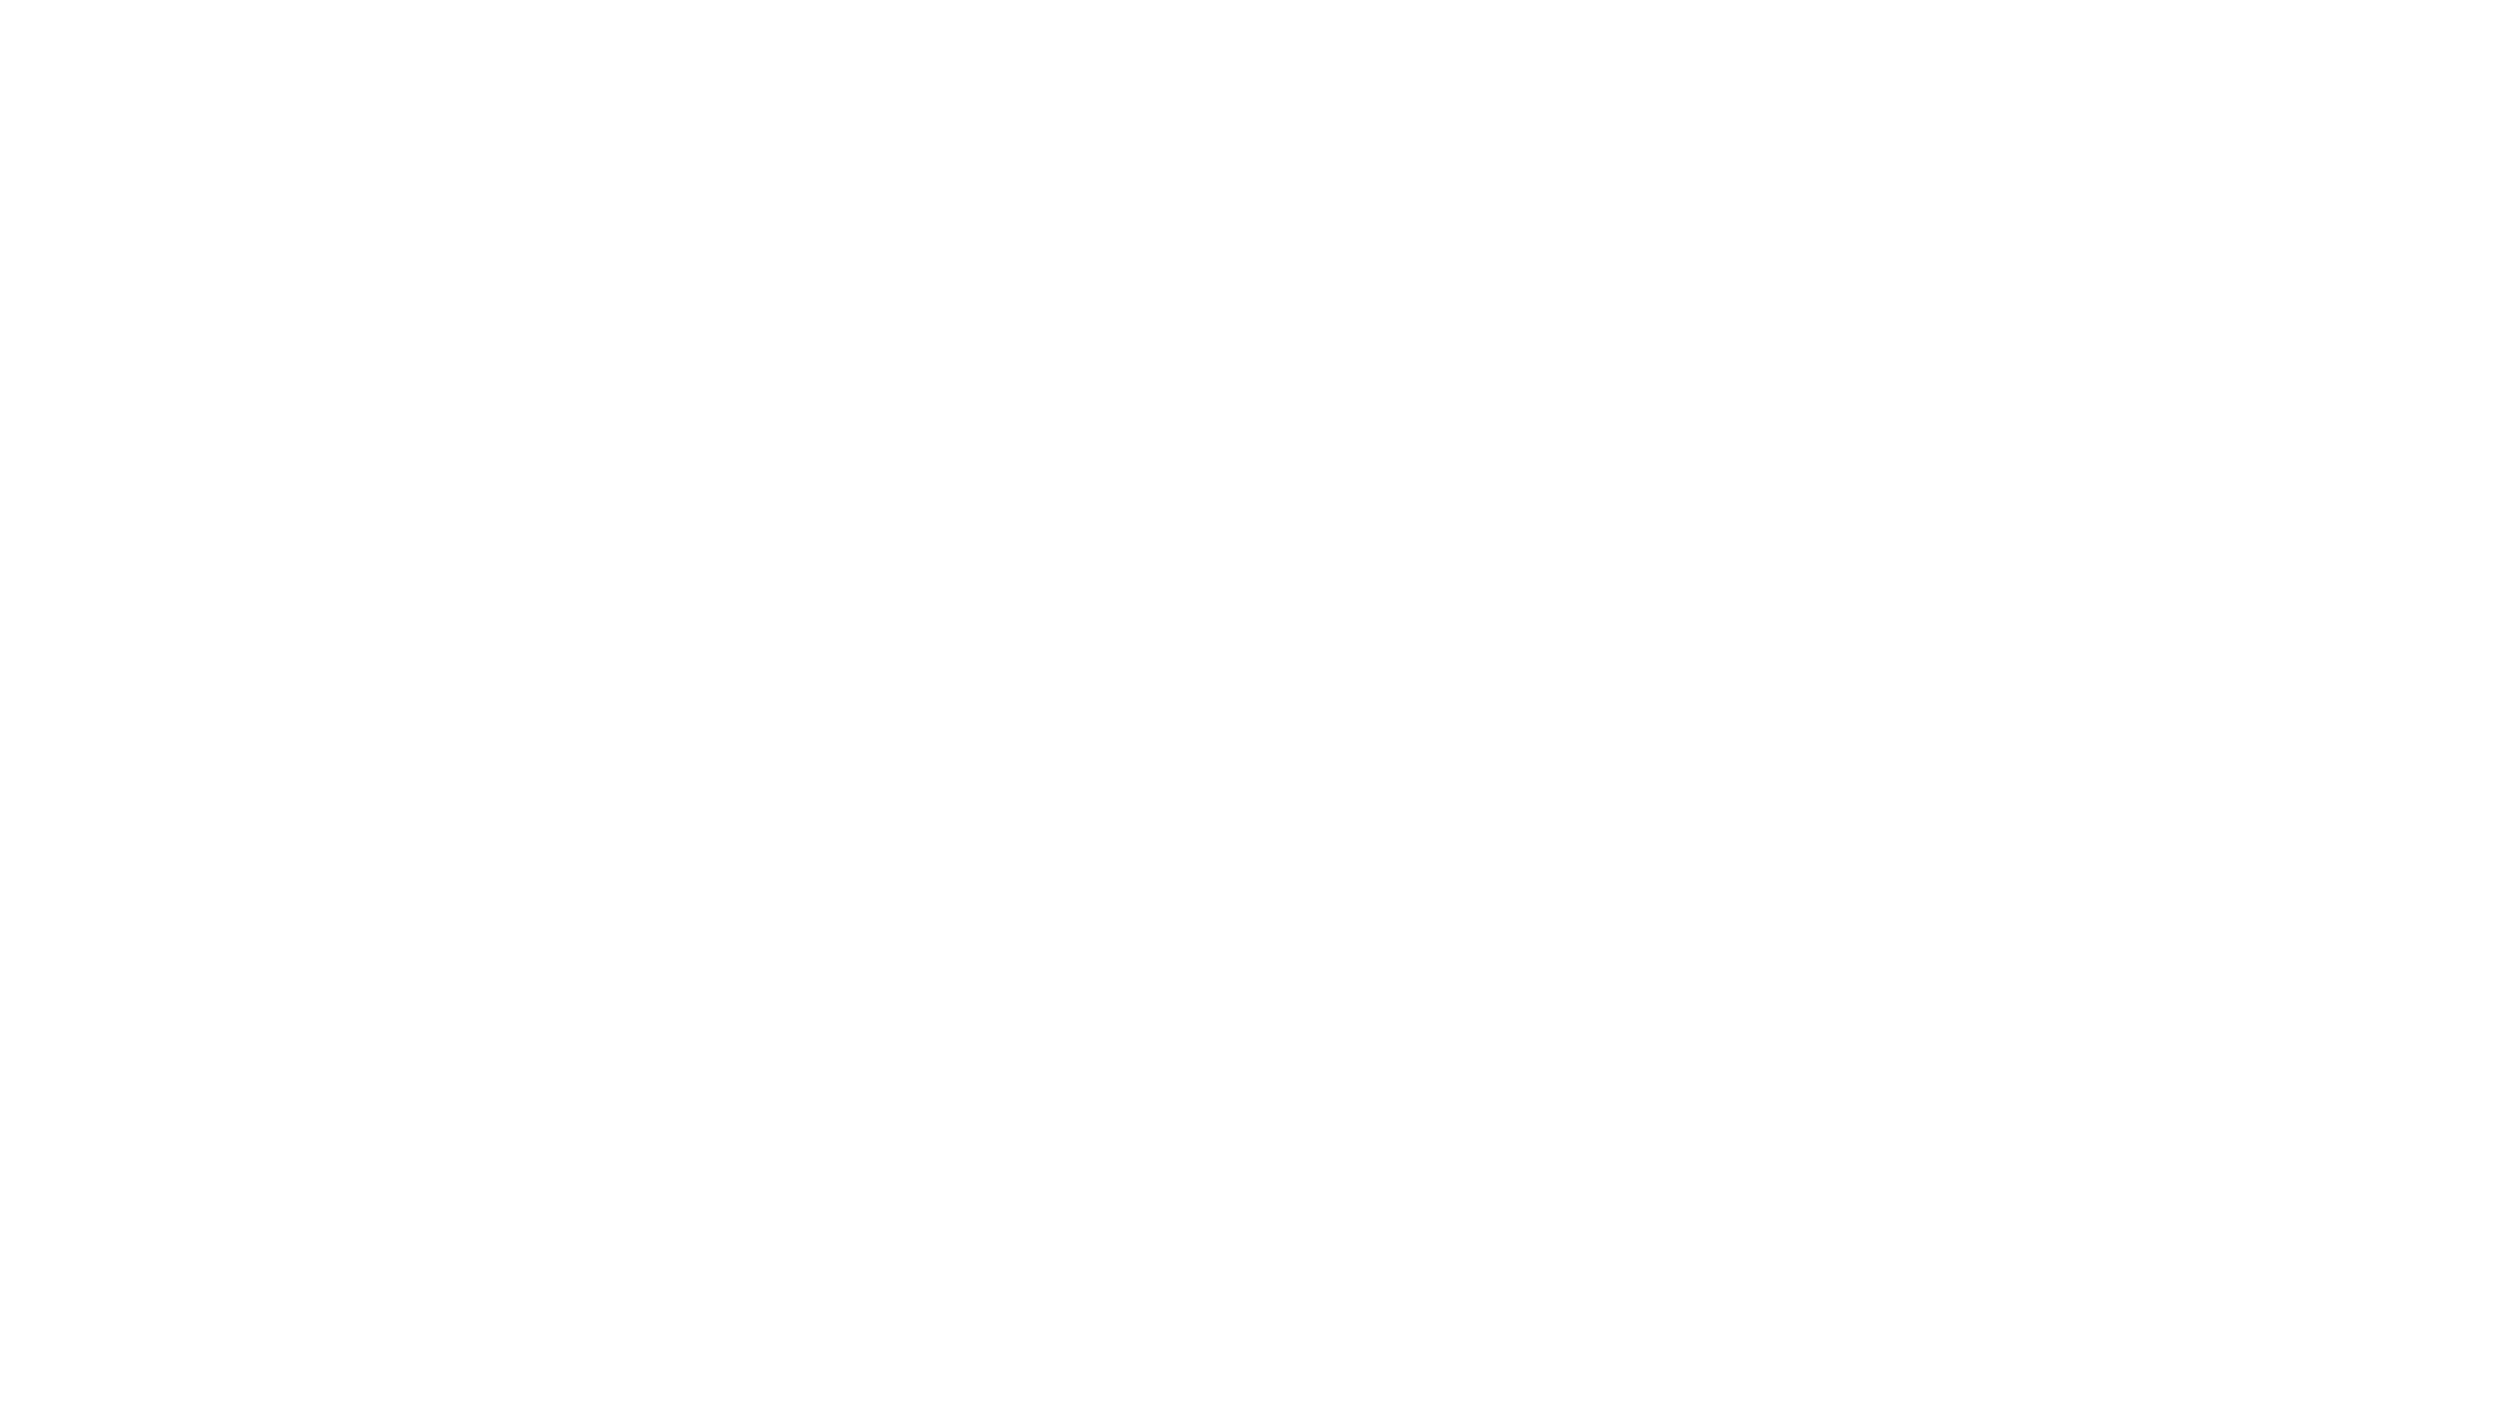 ManoogianSimoneFoundation_logo.png